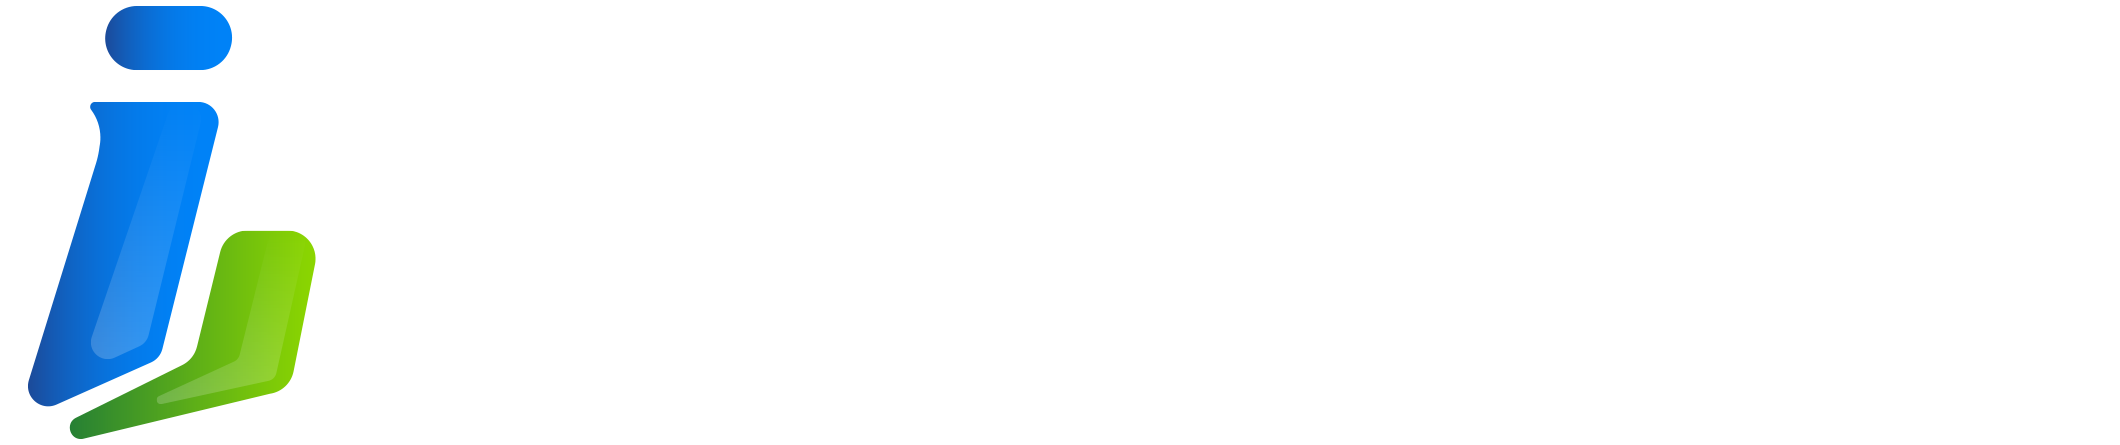 logo ibertecnic blanc